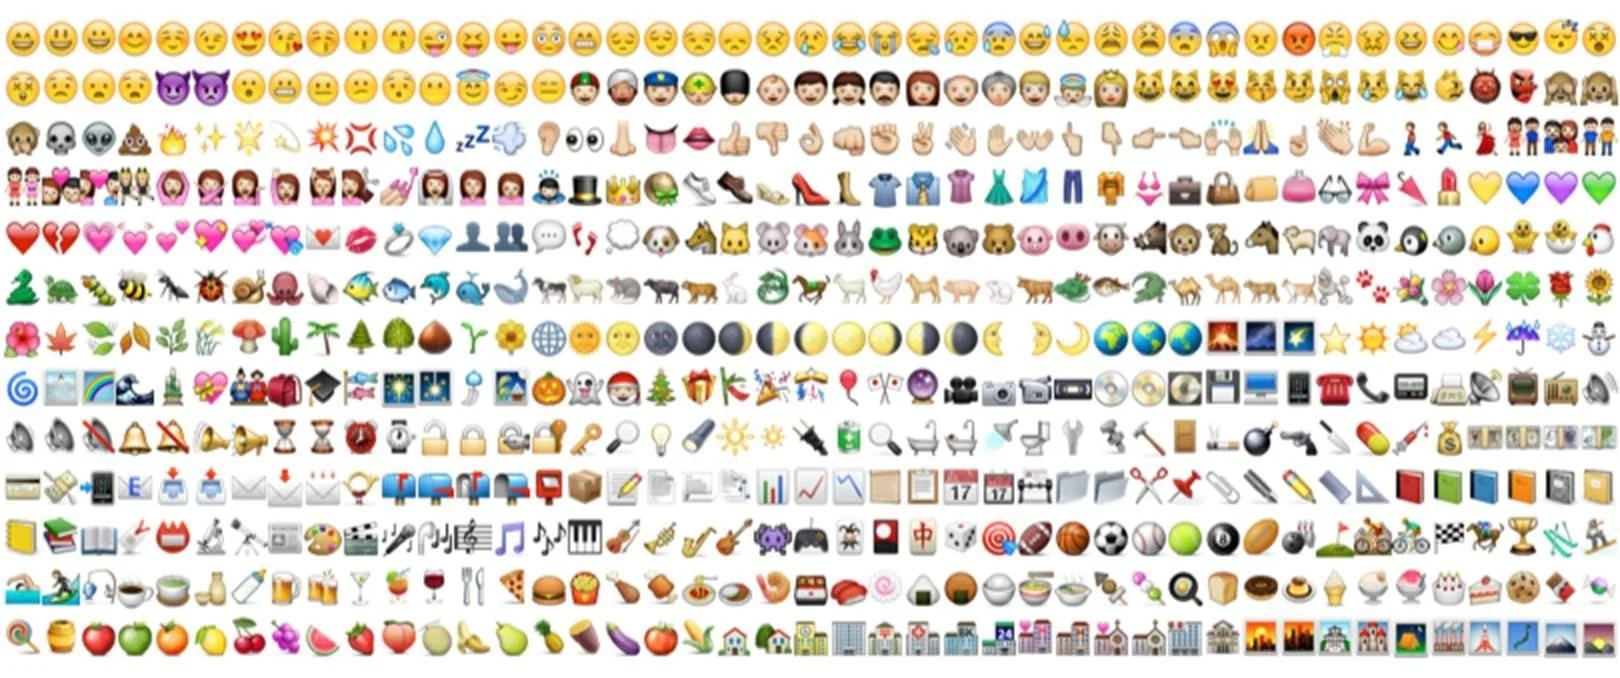 Emojis in ad text emoji list